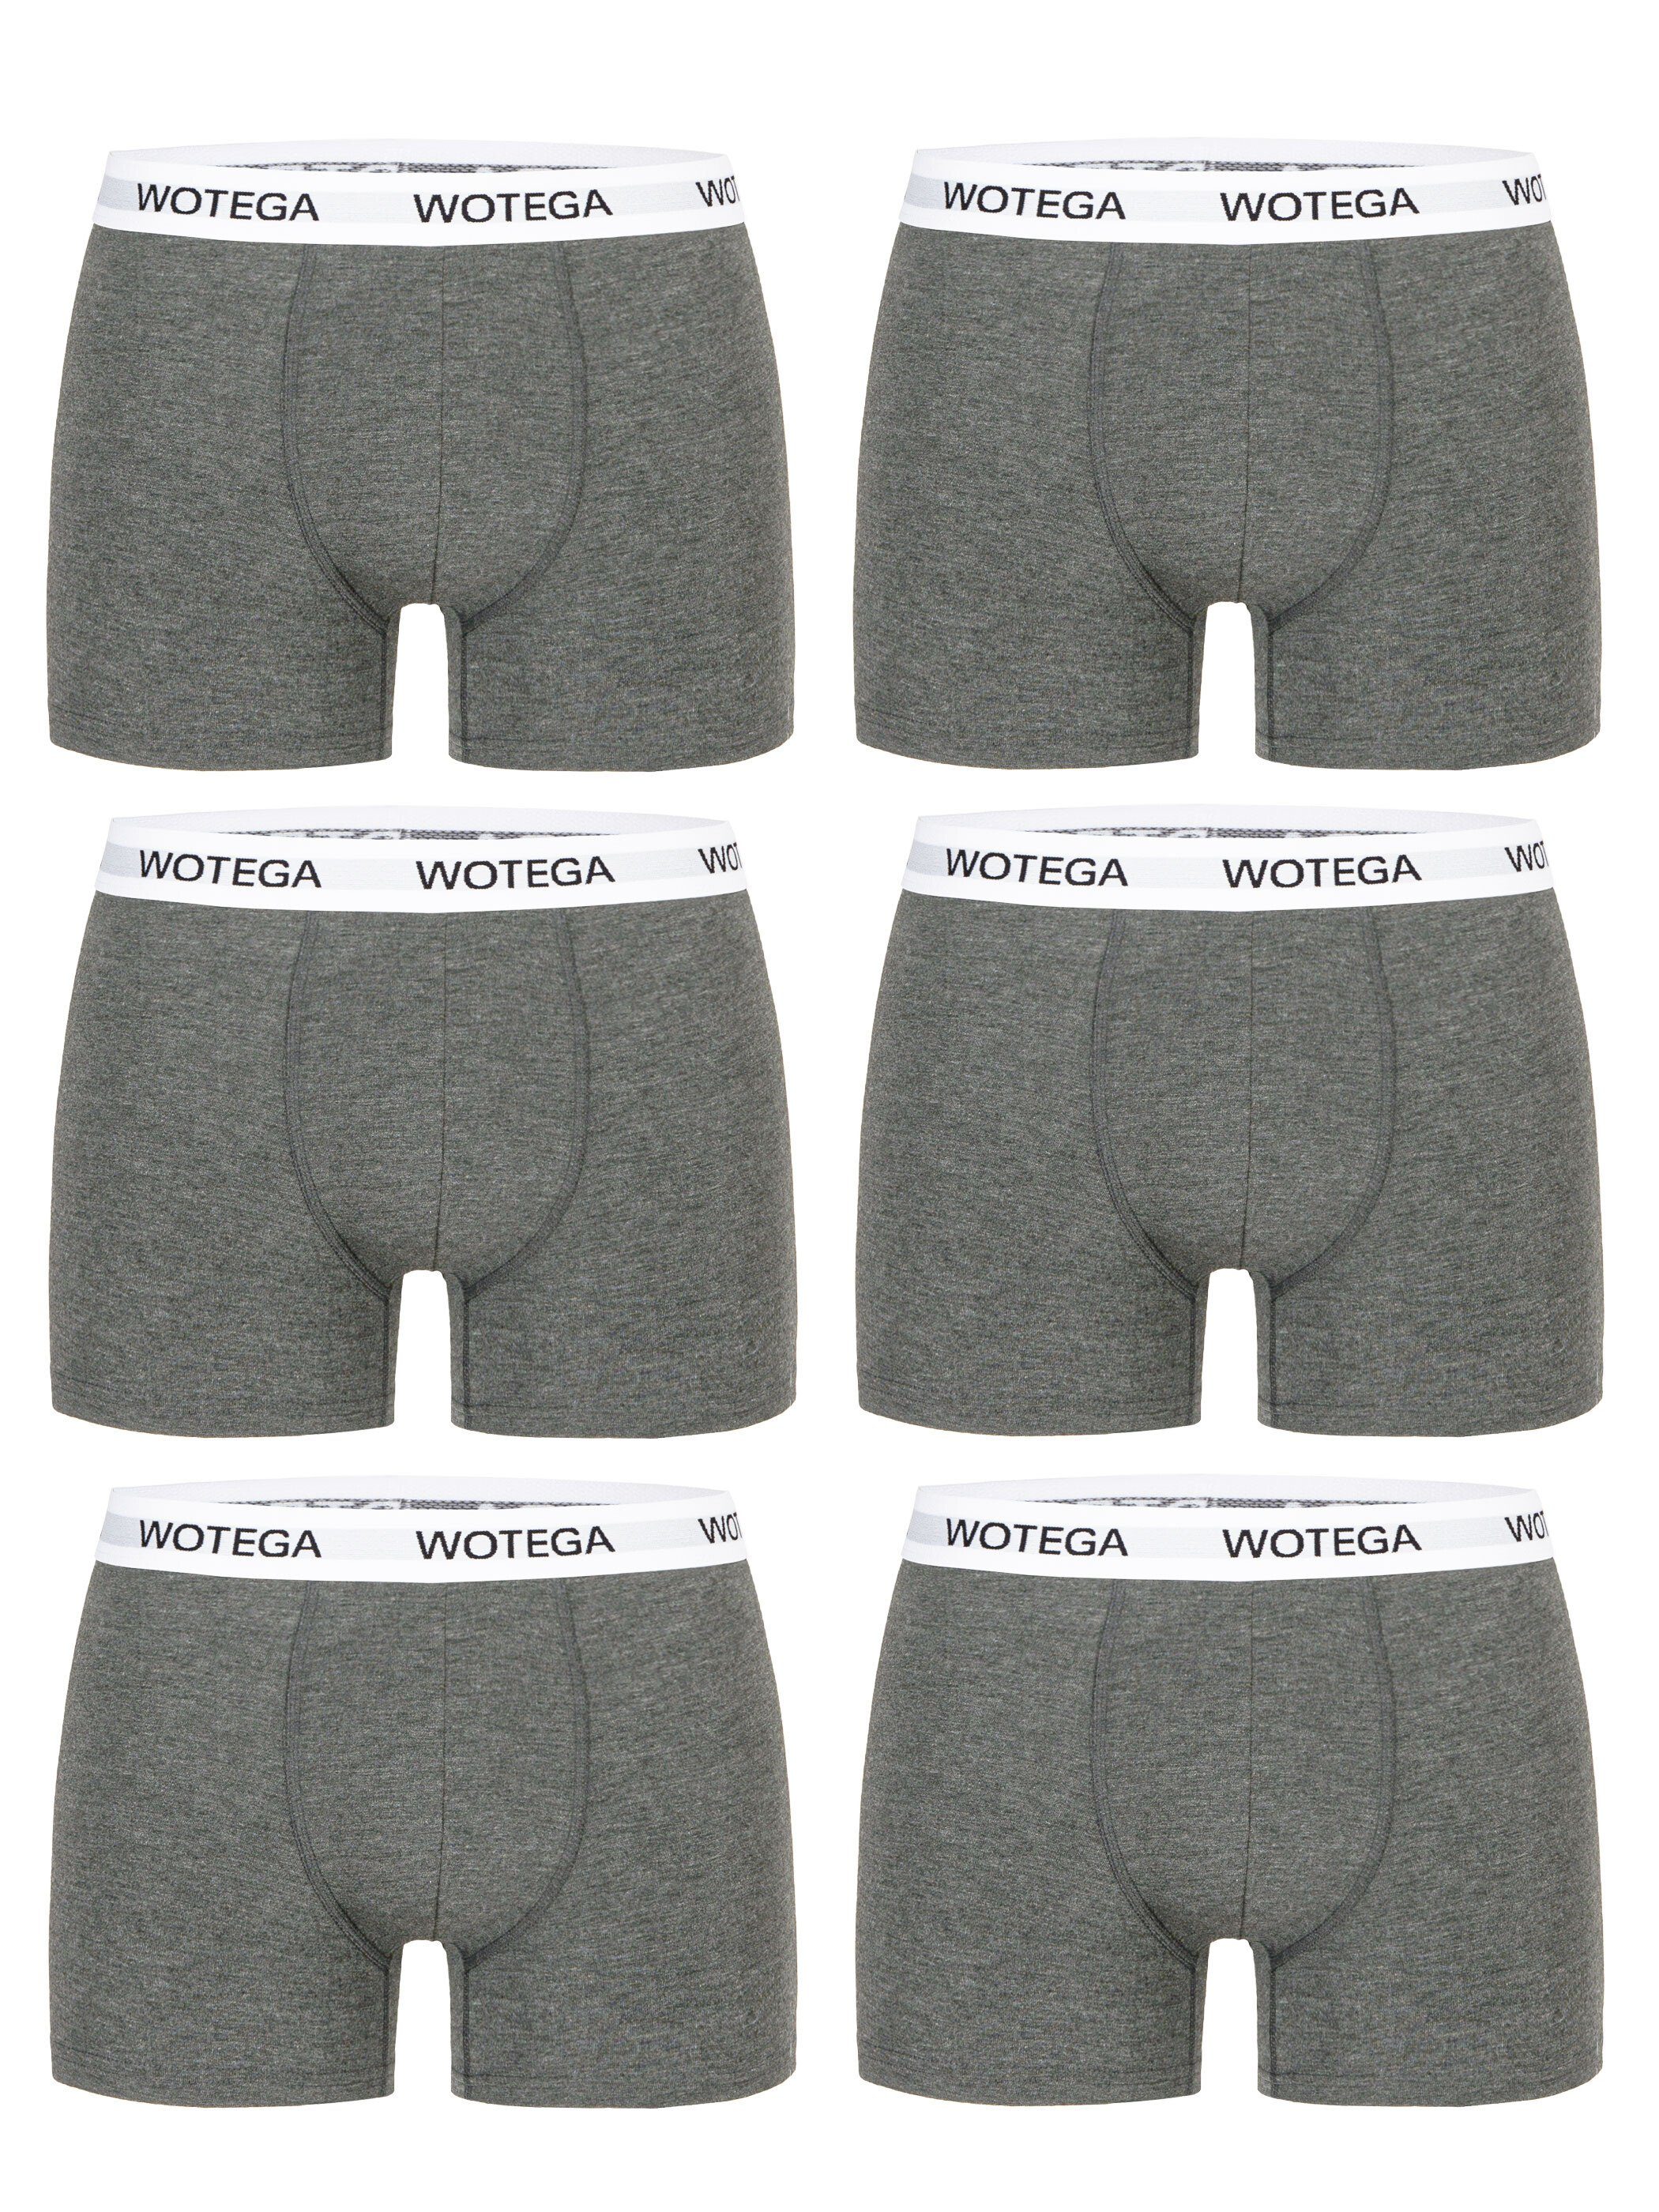 WOTEGA Boxershorts Joe (Spar-Packung, 6er-Pack) bequeme Baumwoll Unterhosen im 6er Pack Grau (Phantom 194205)